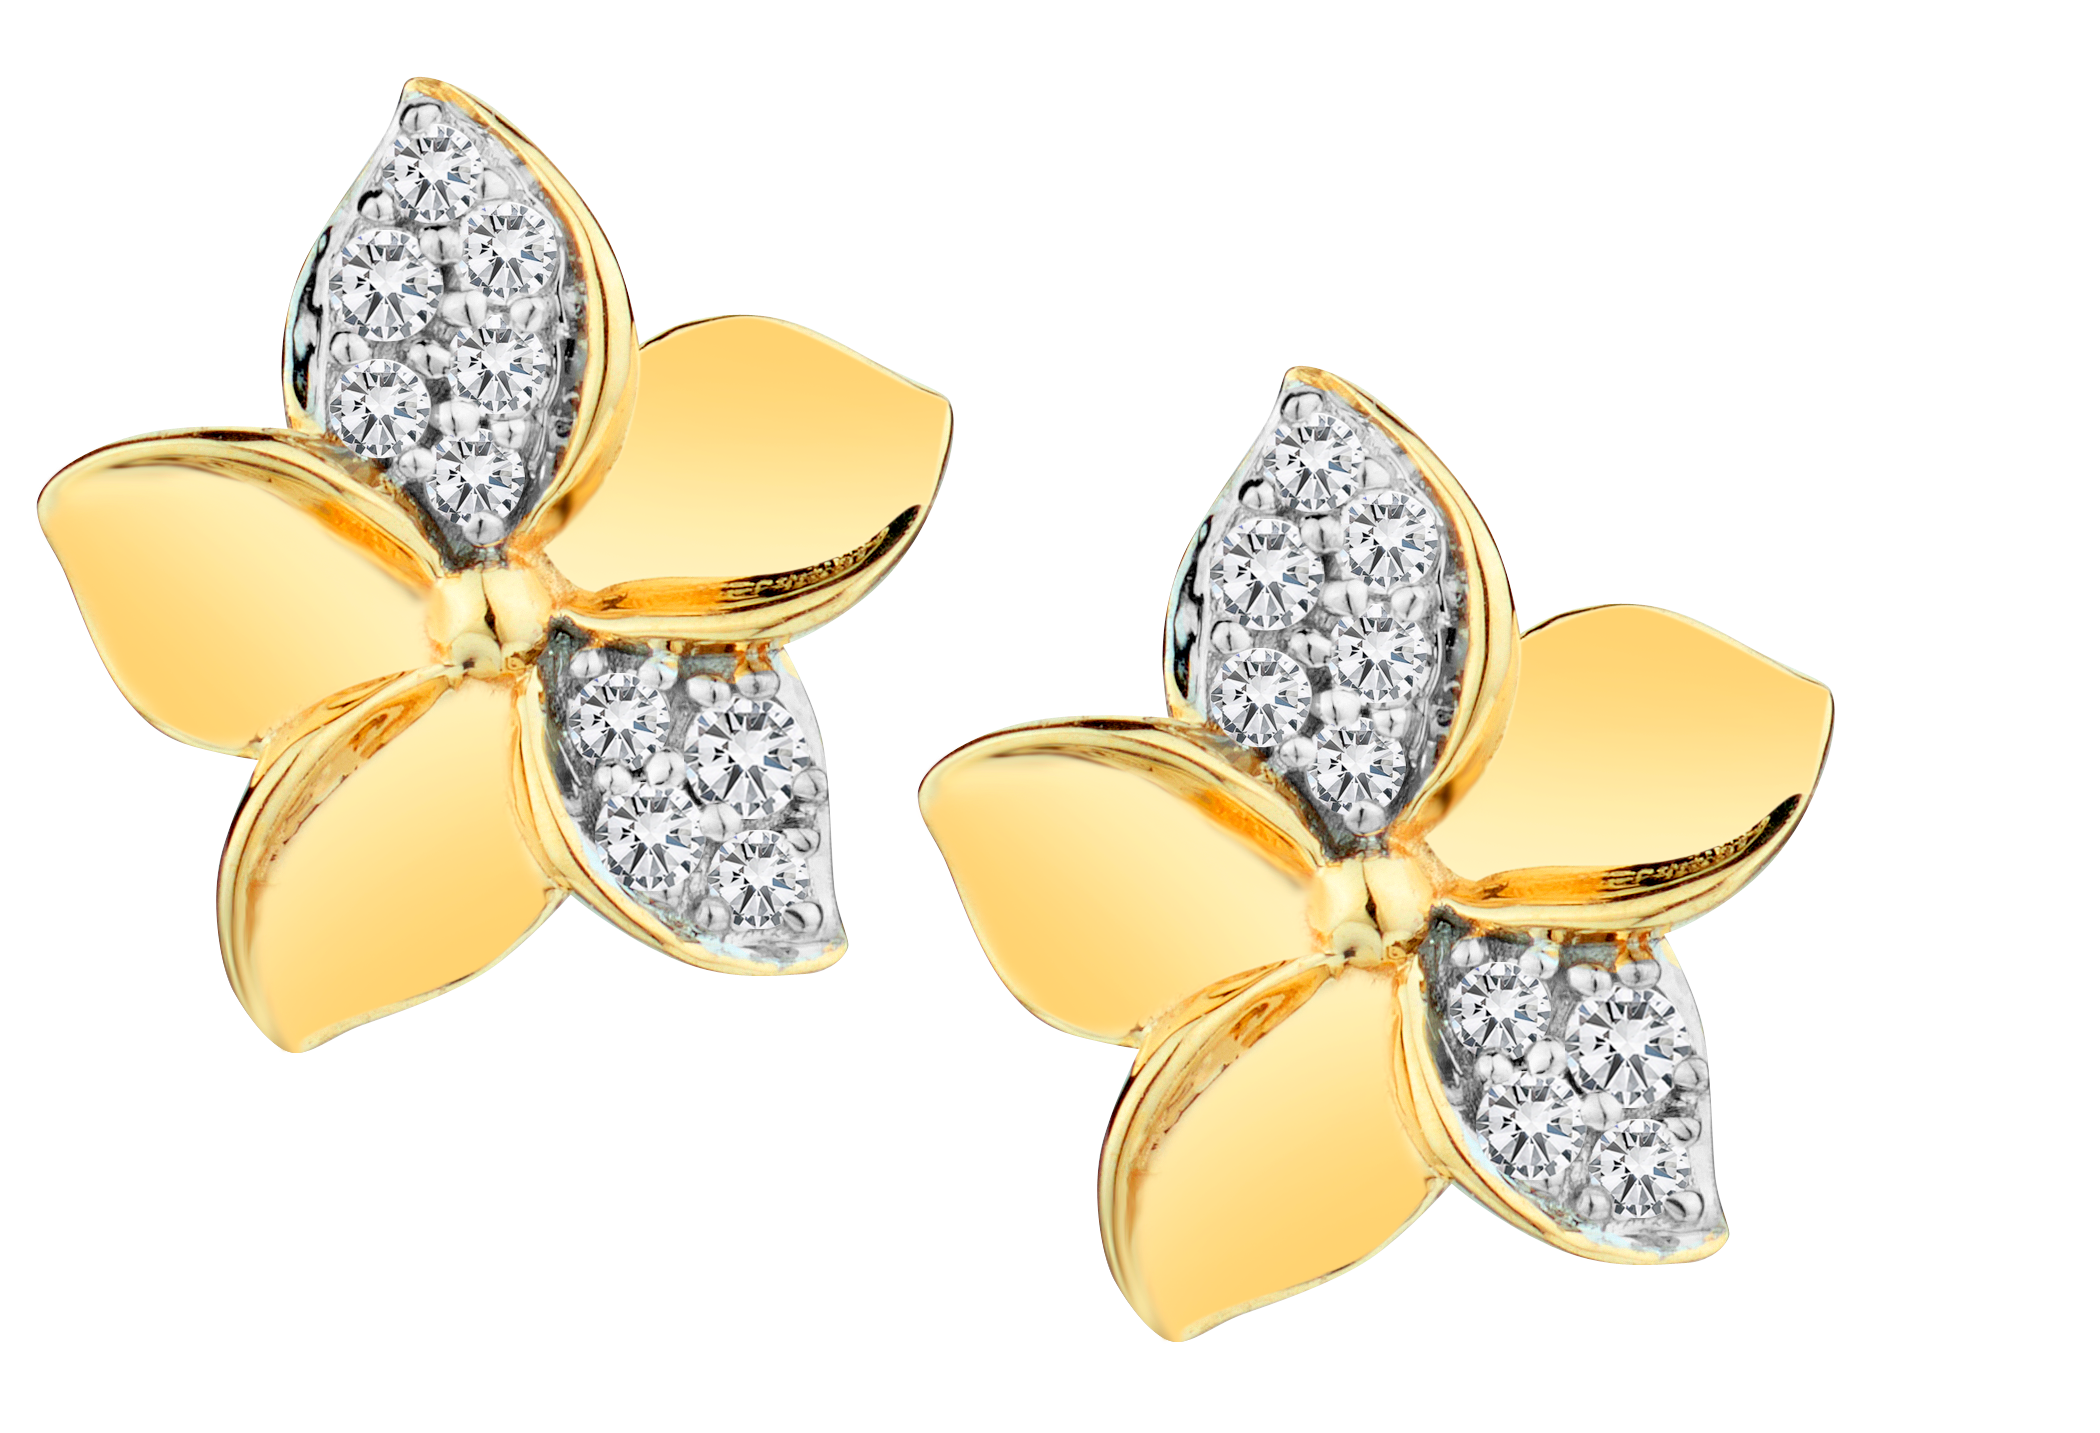 .09 Carat of Diamonds "Flower" Earrings, 10kt Yellow Gold.....................NOW